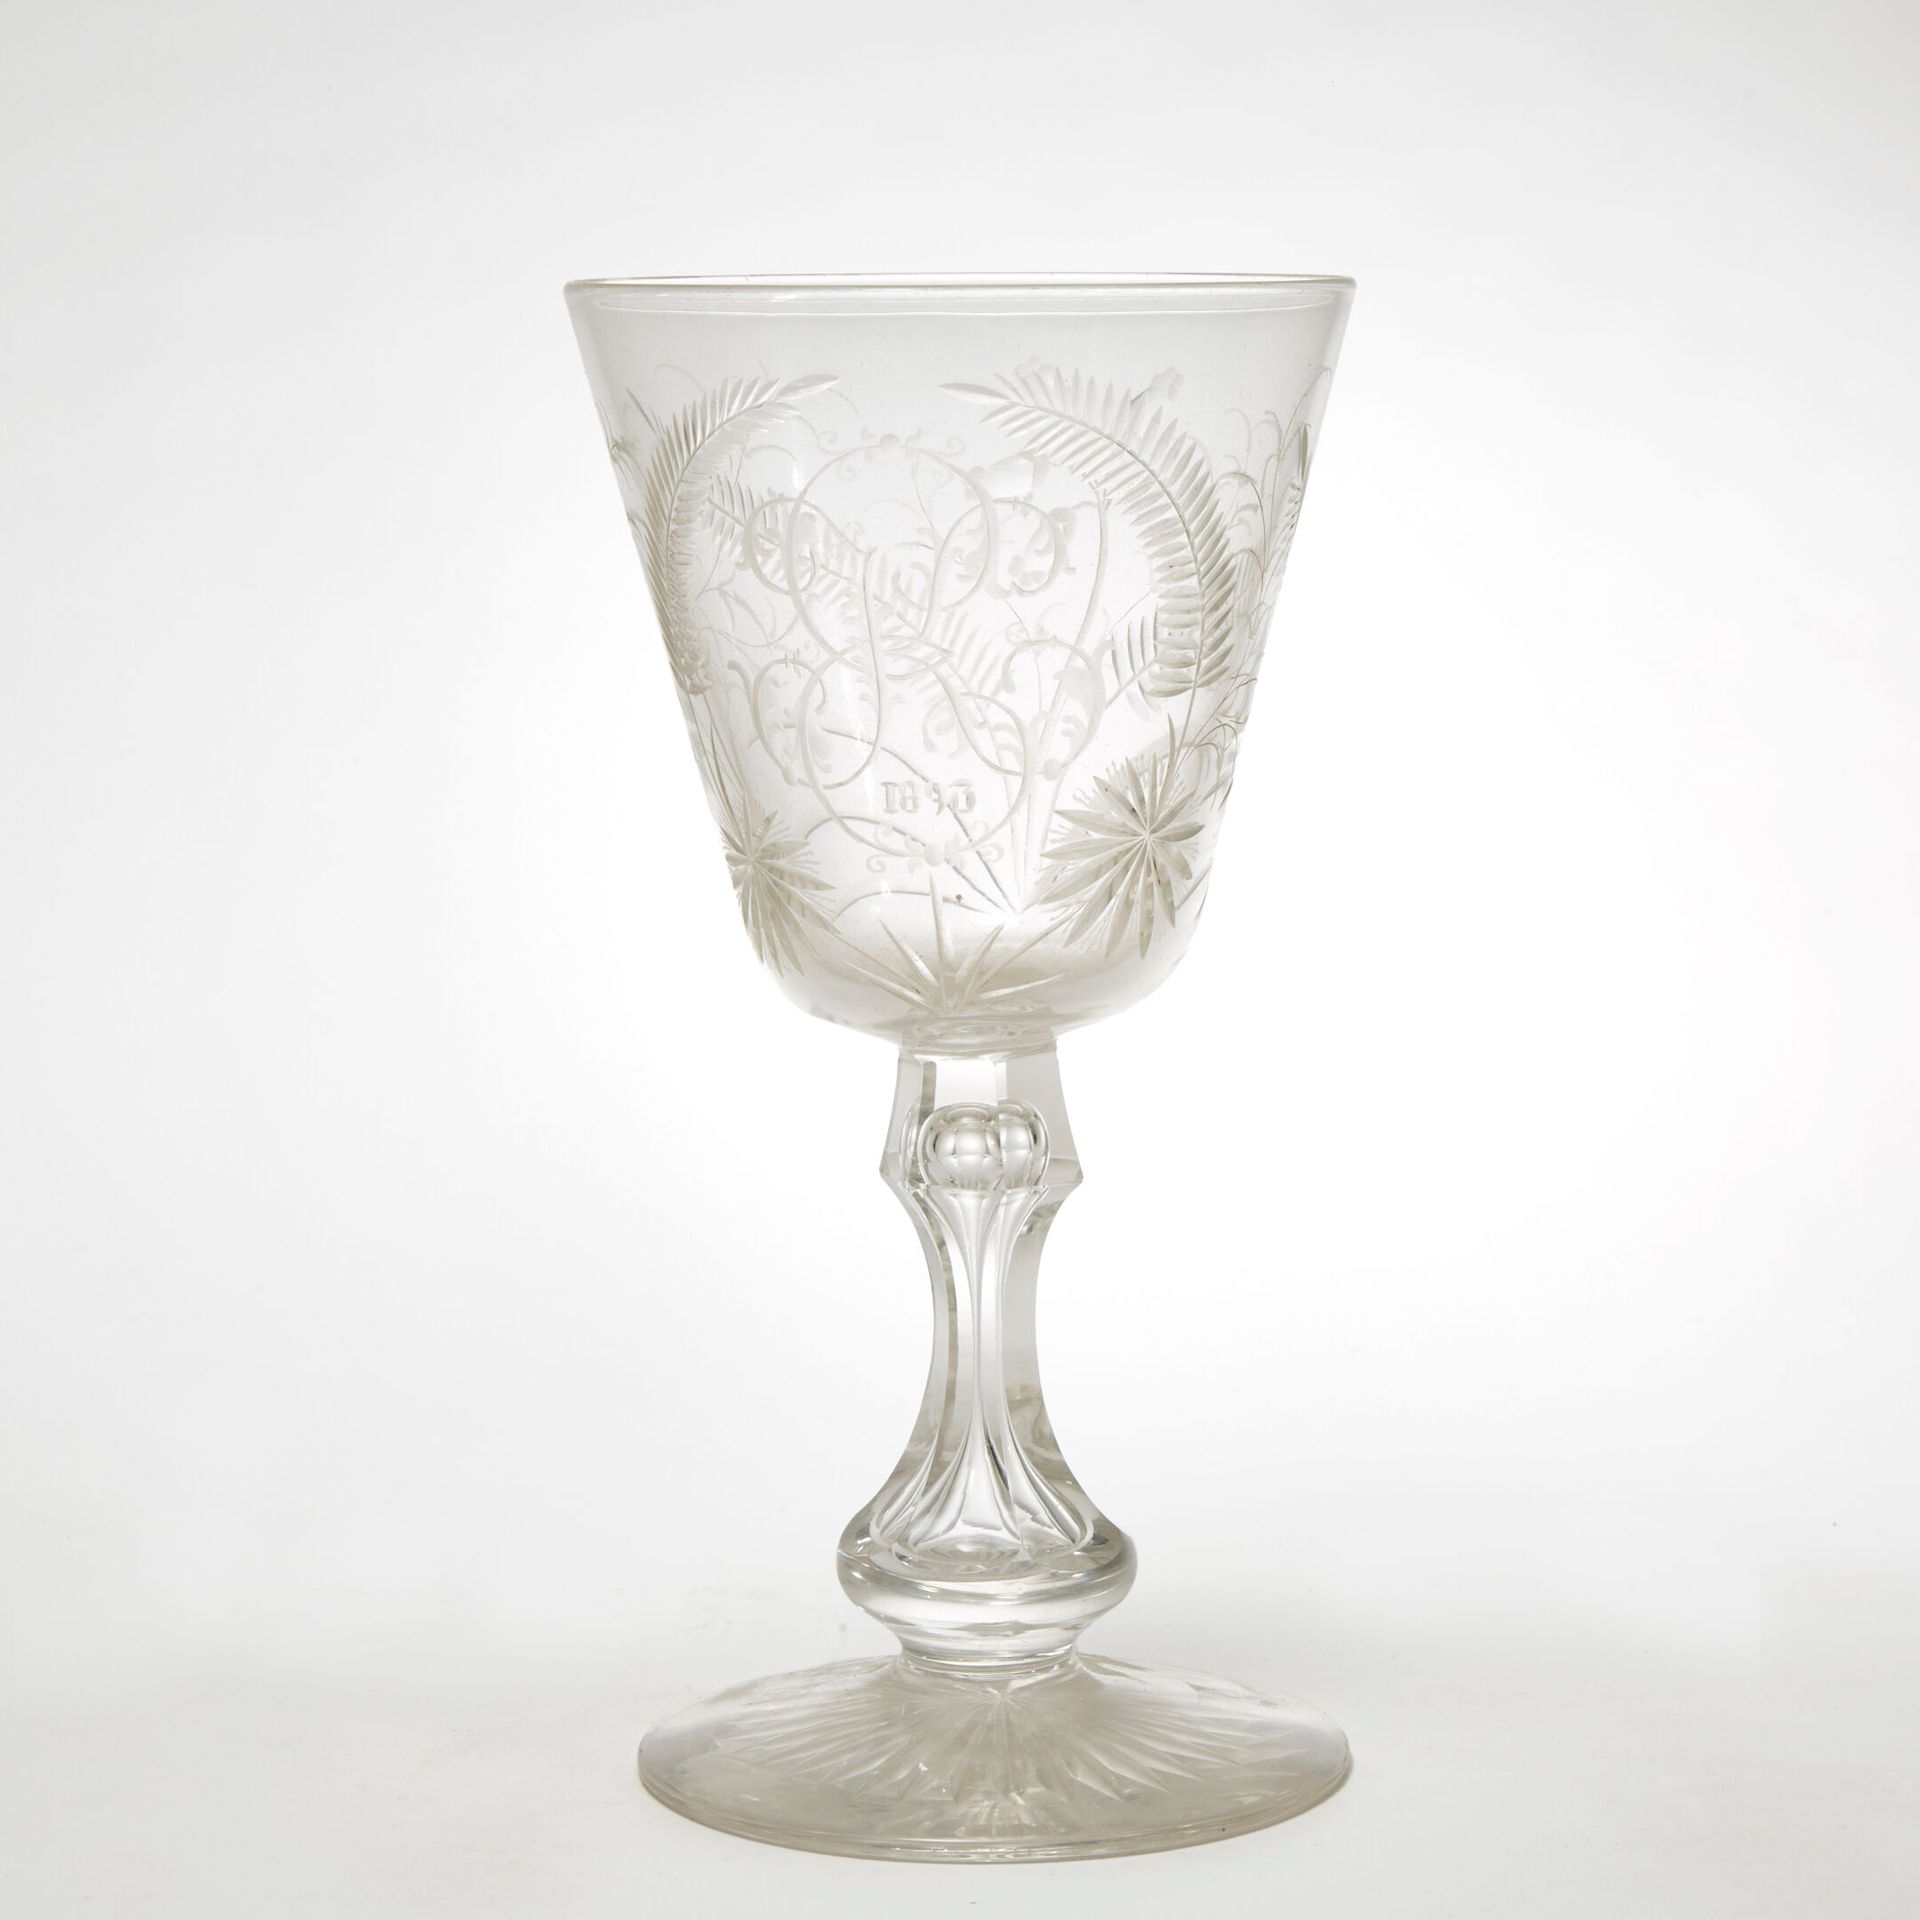 XIX SIÈCLE 19 世纪
一个大型水晶柱柄玻璃杯，刻有大棕榈和树枝的雕刻装饰，中间有一个 KE 字母，日期为 1893 年。 
高 20 厘米。